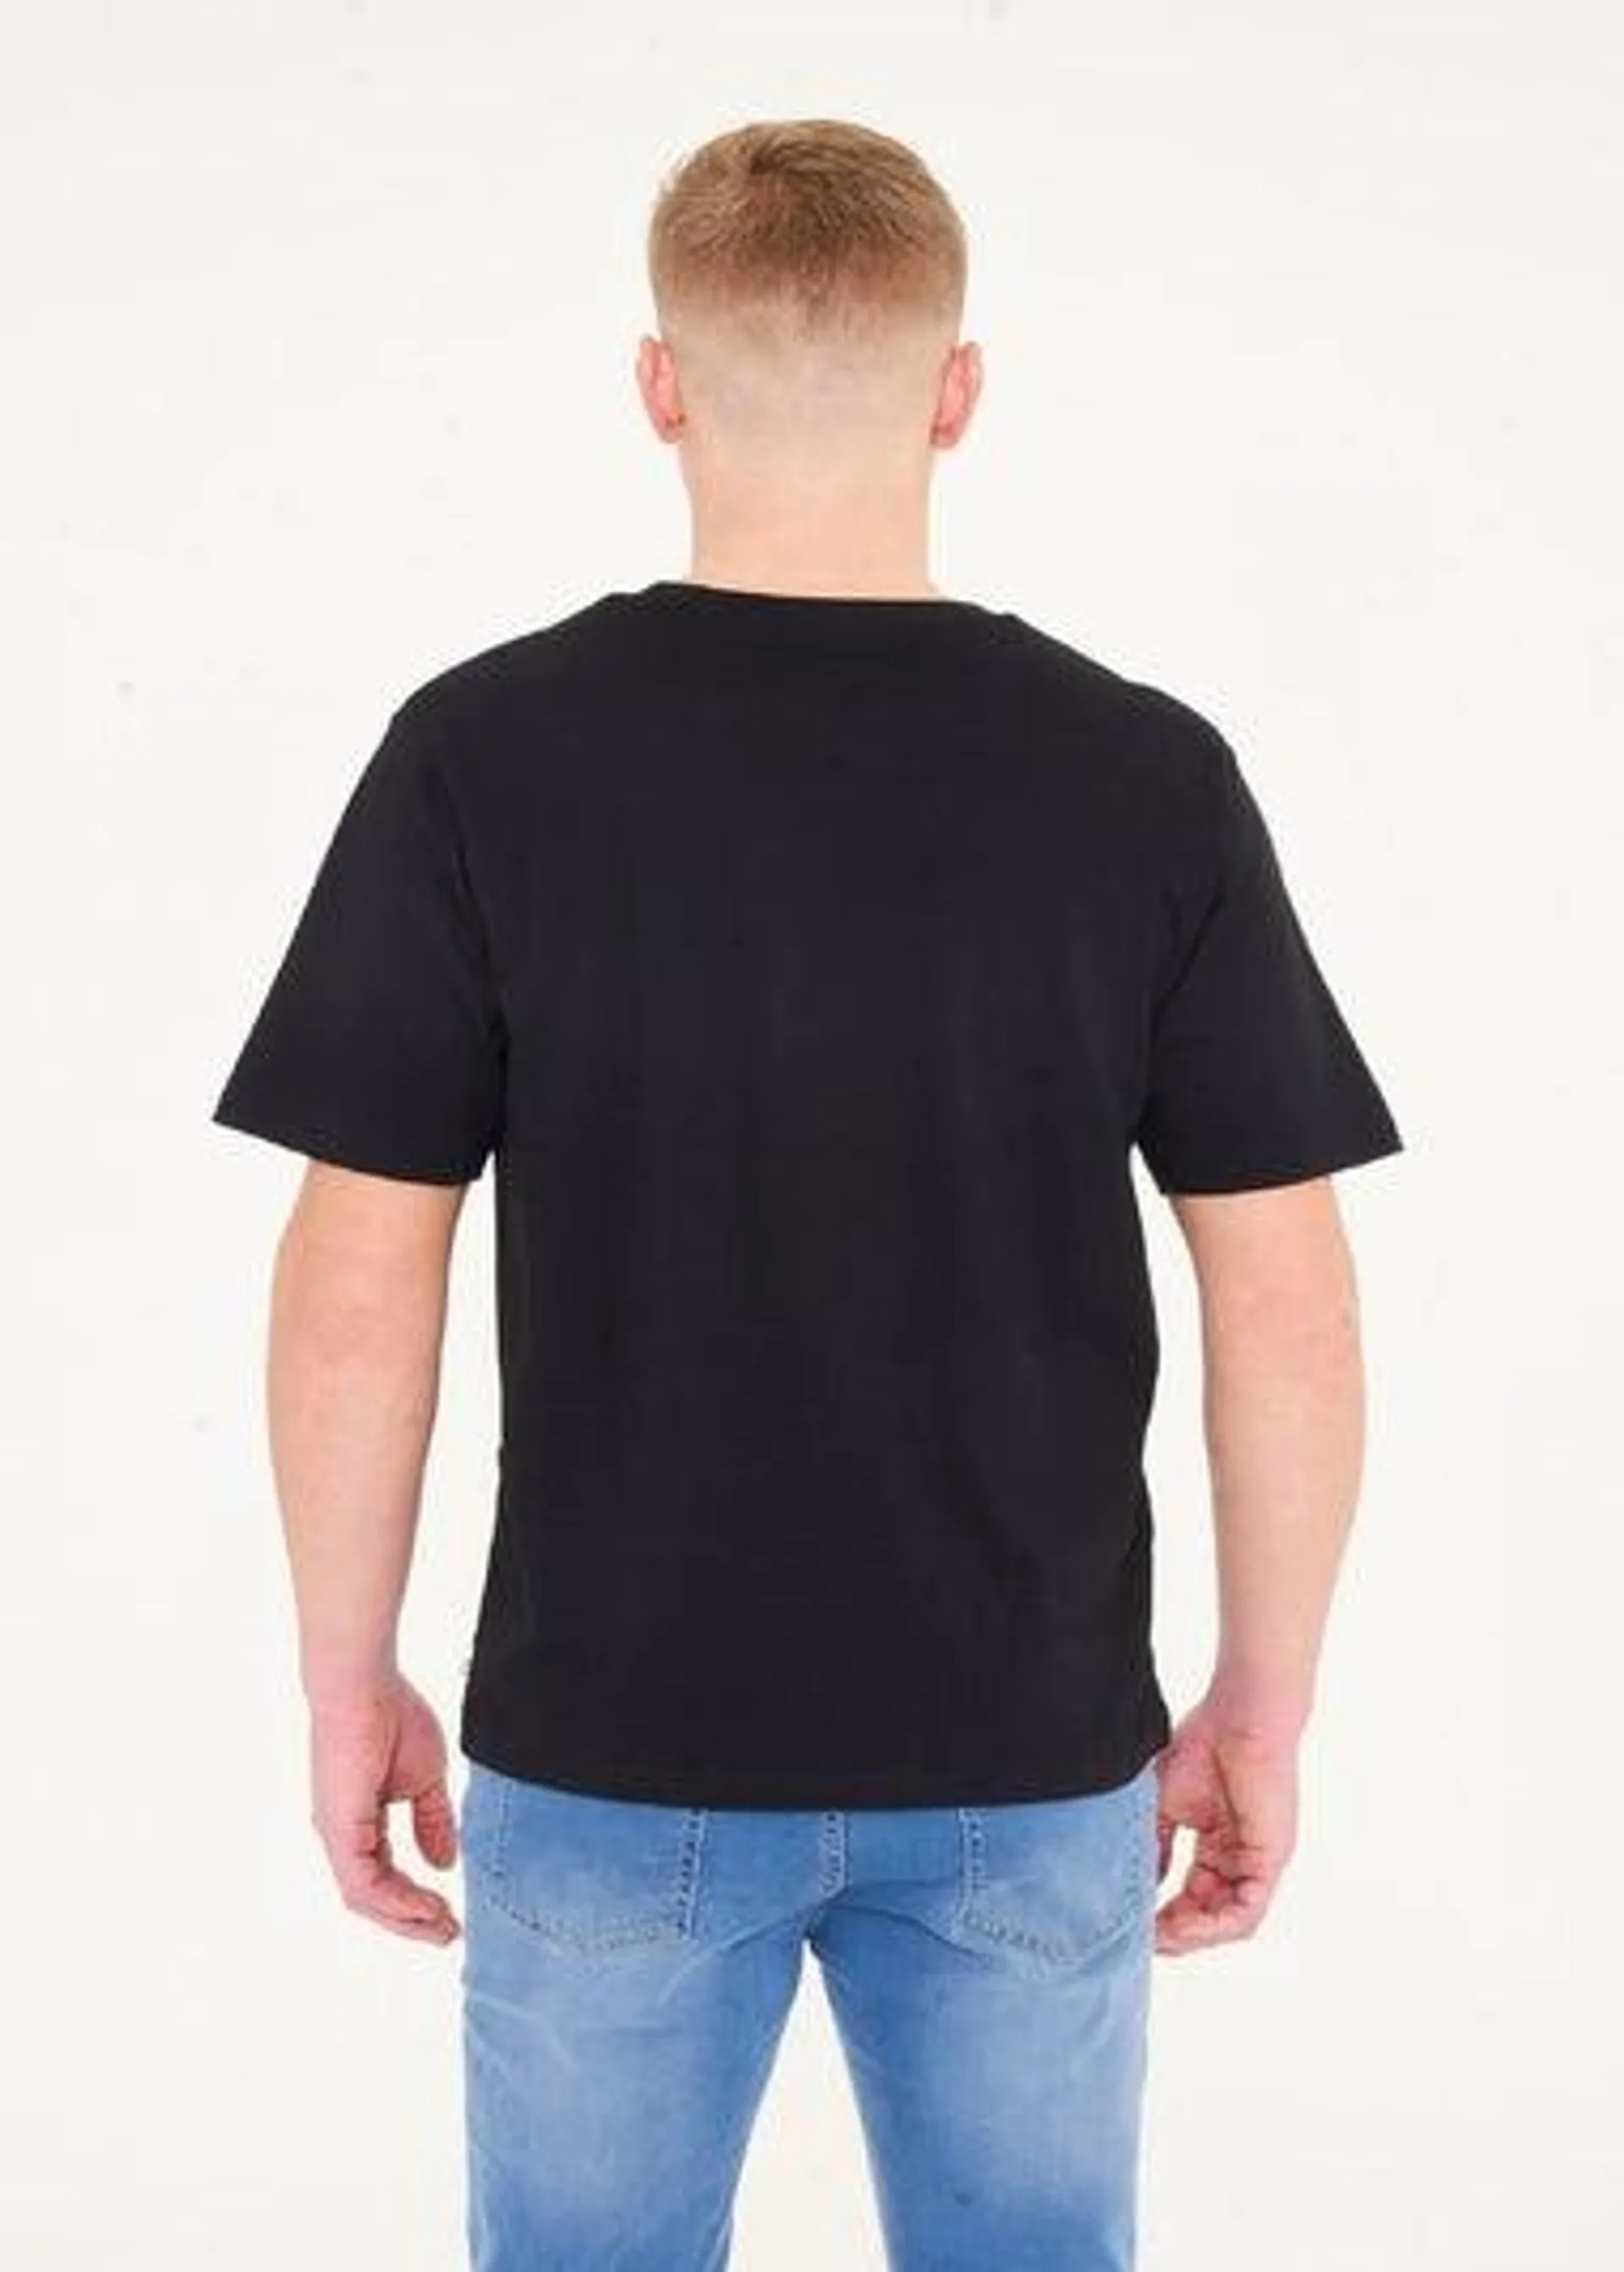 WWE Mens Black T-Shirt - XL